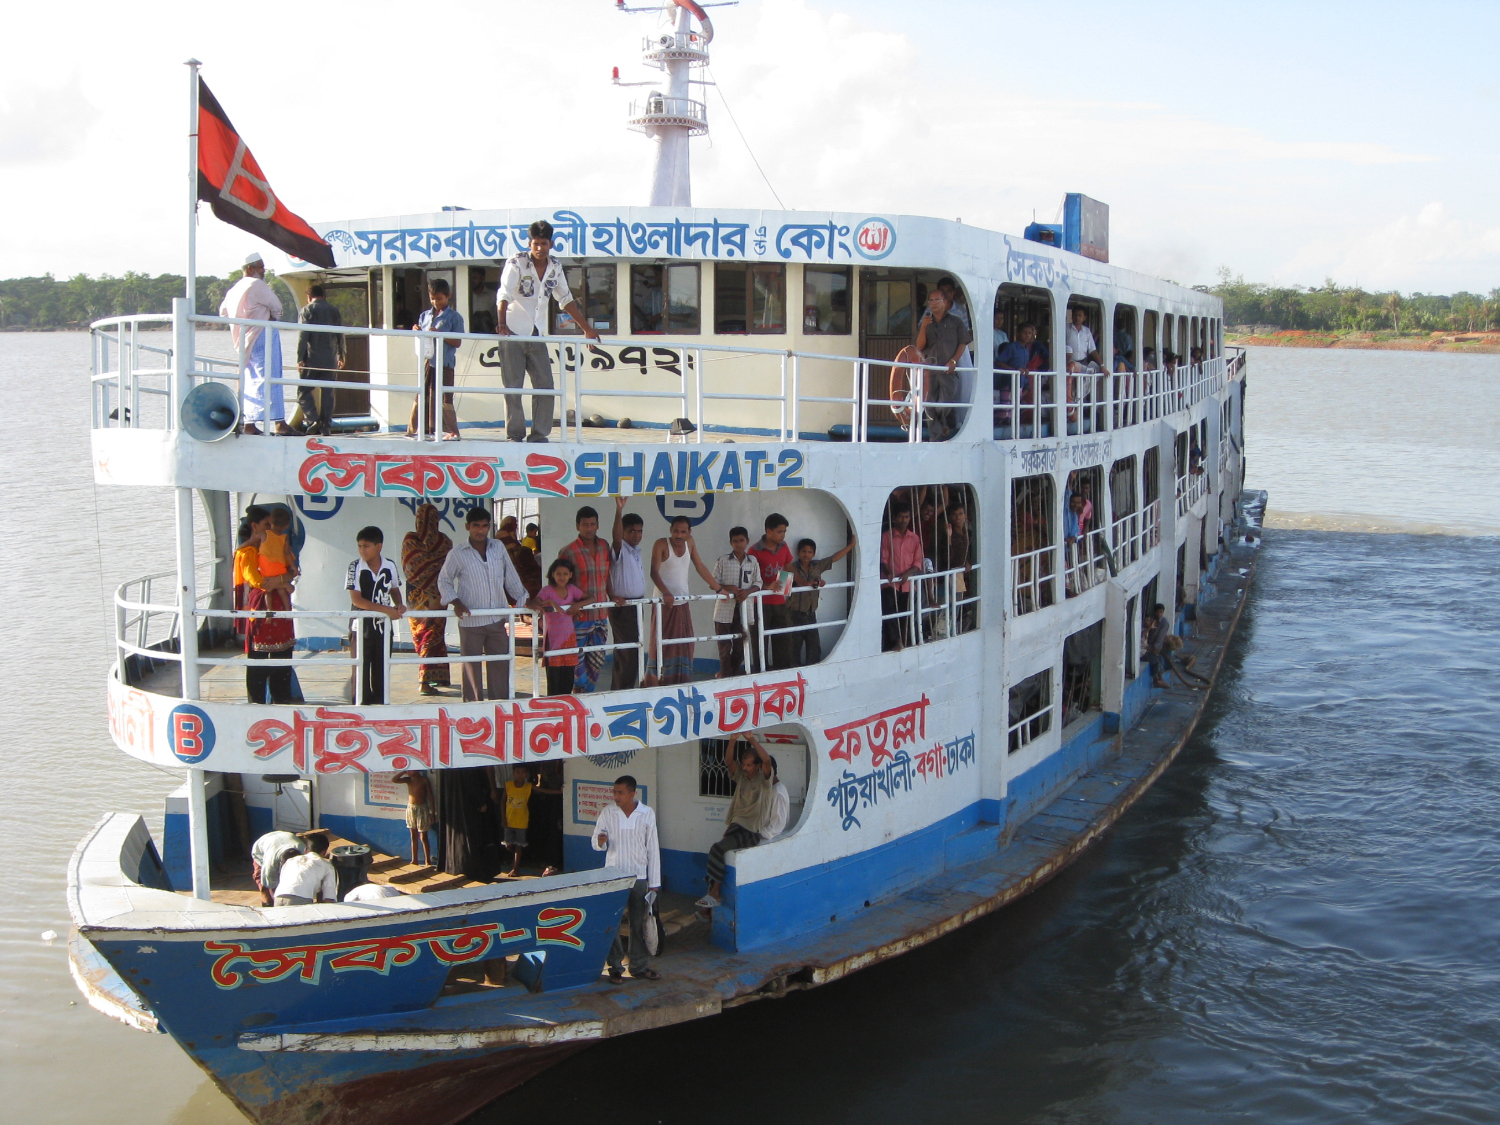 Ferry in Bangladesh